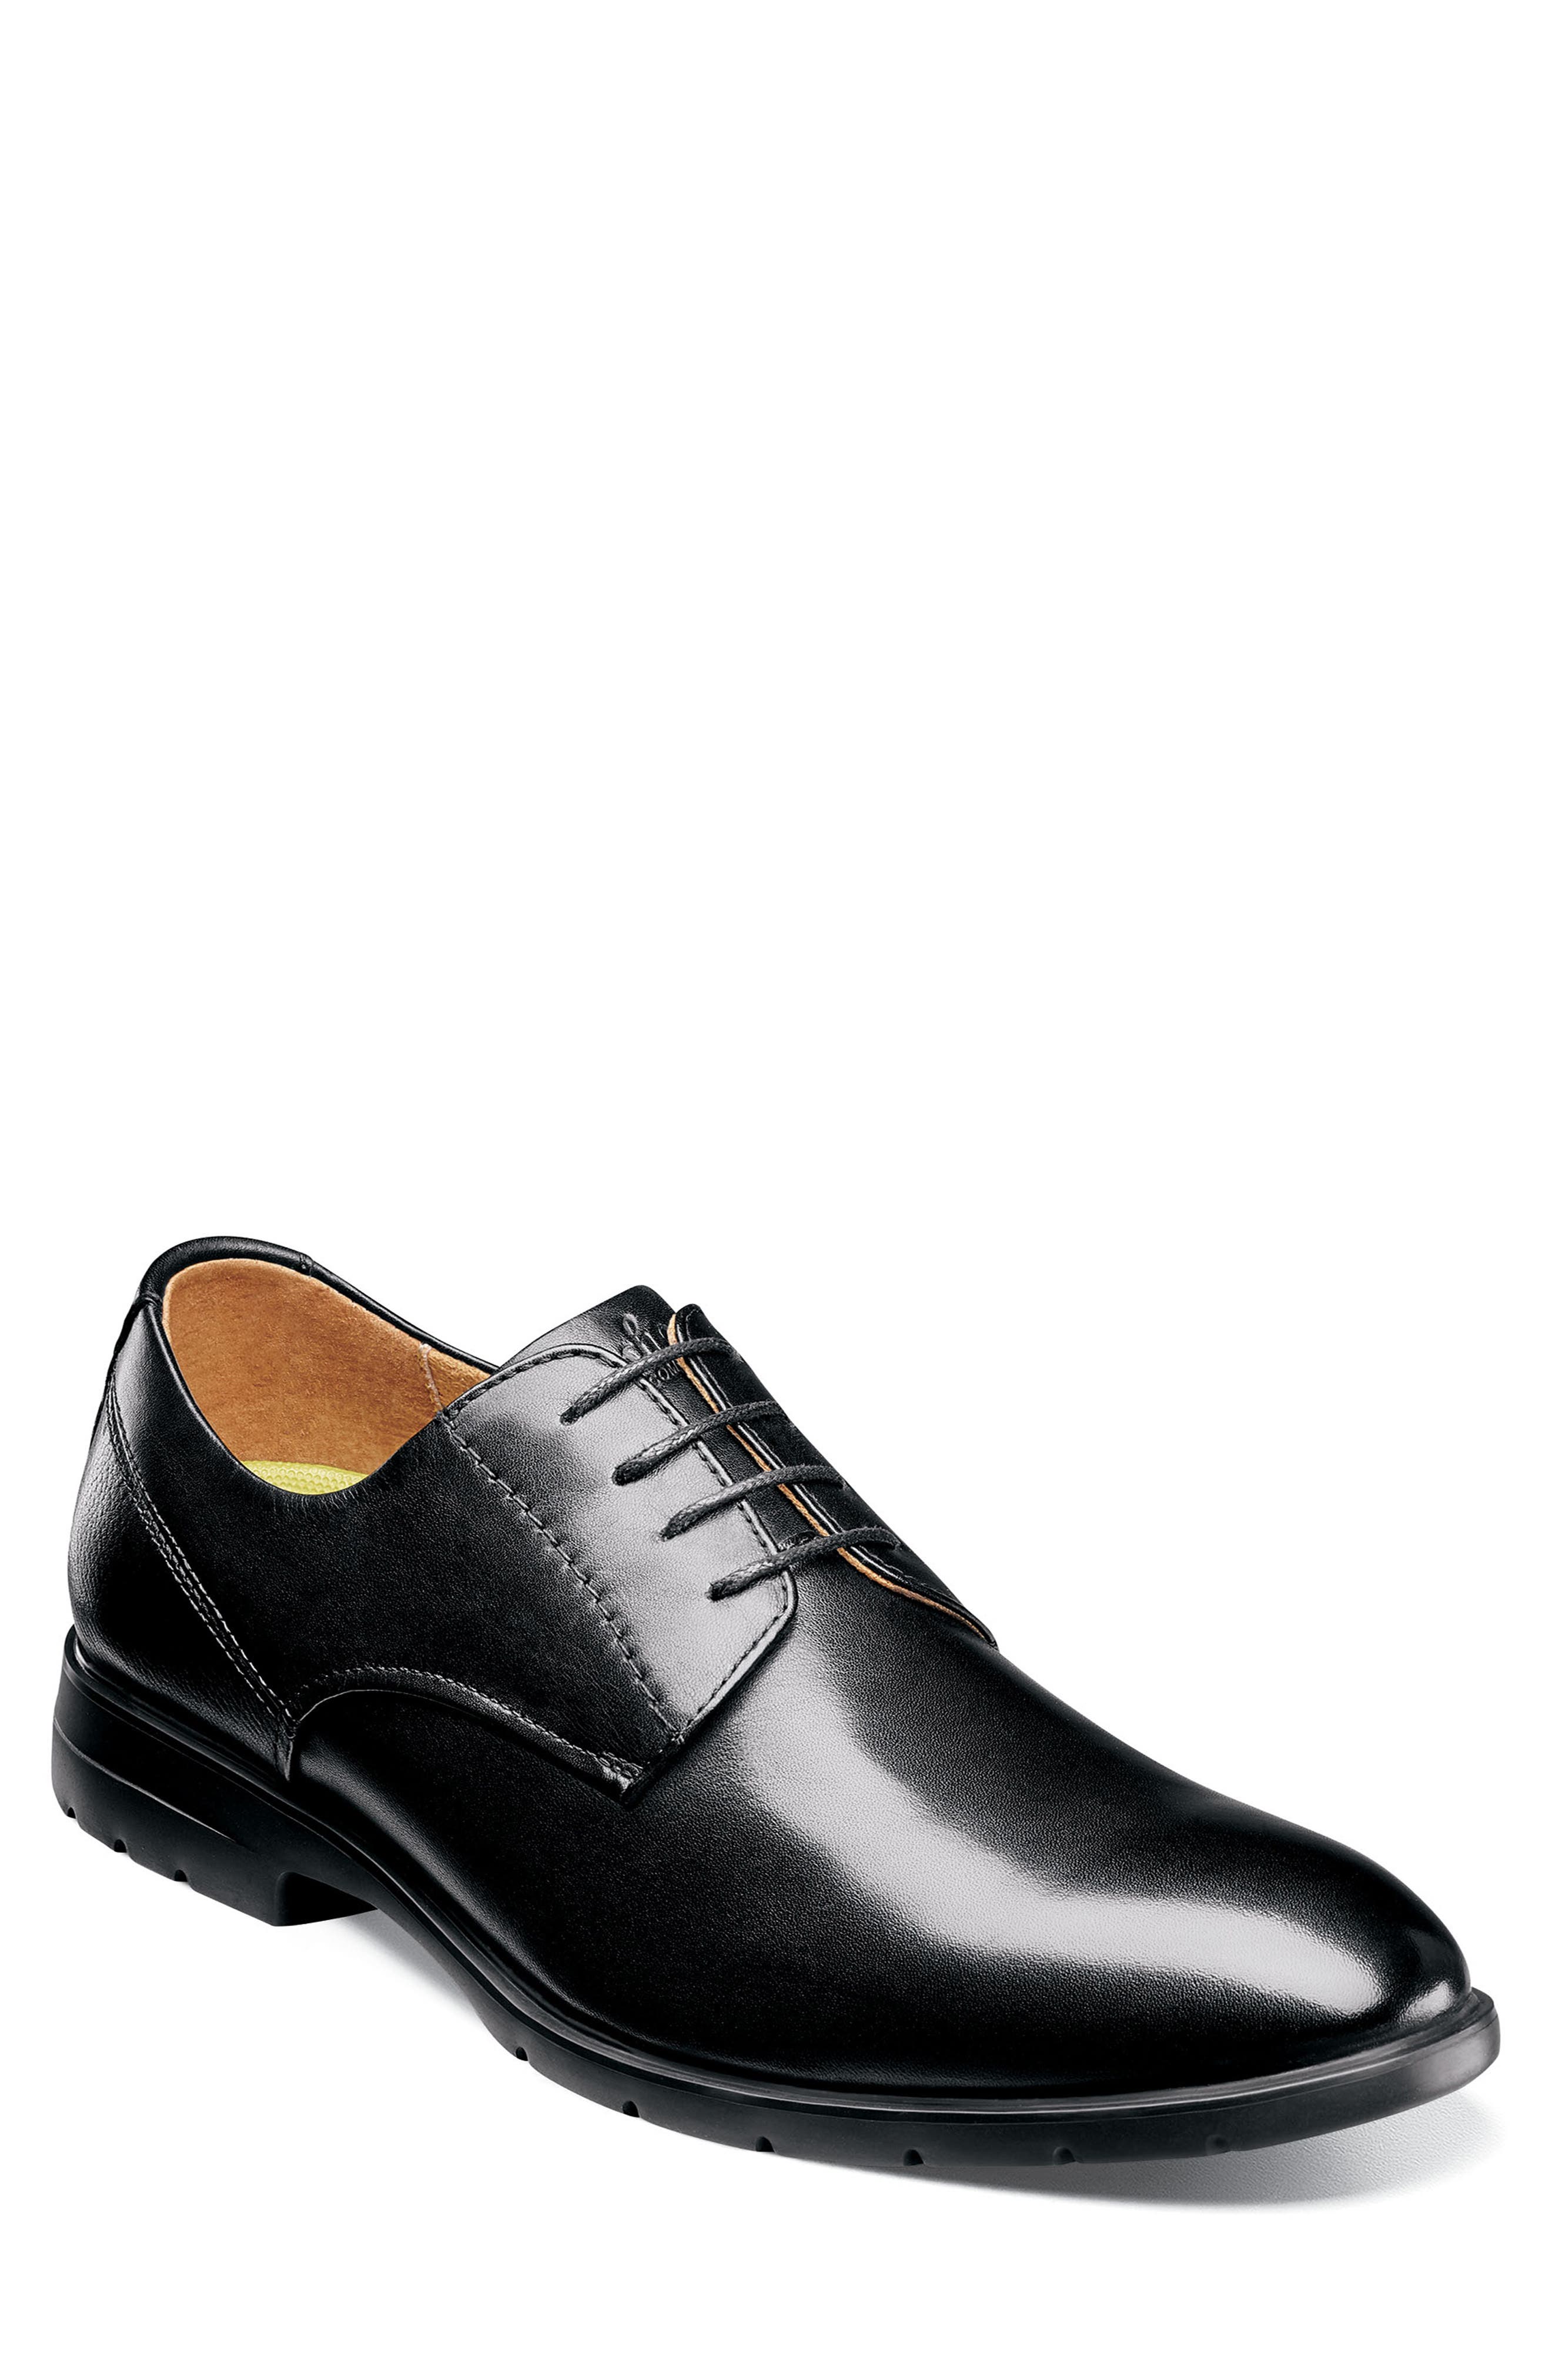 florsheim wide width shoes